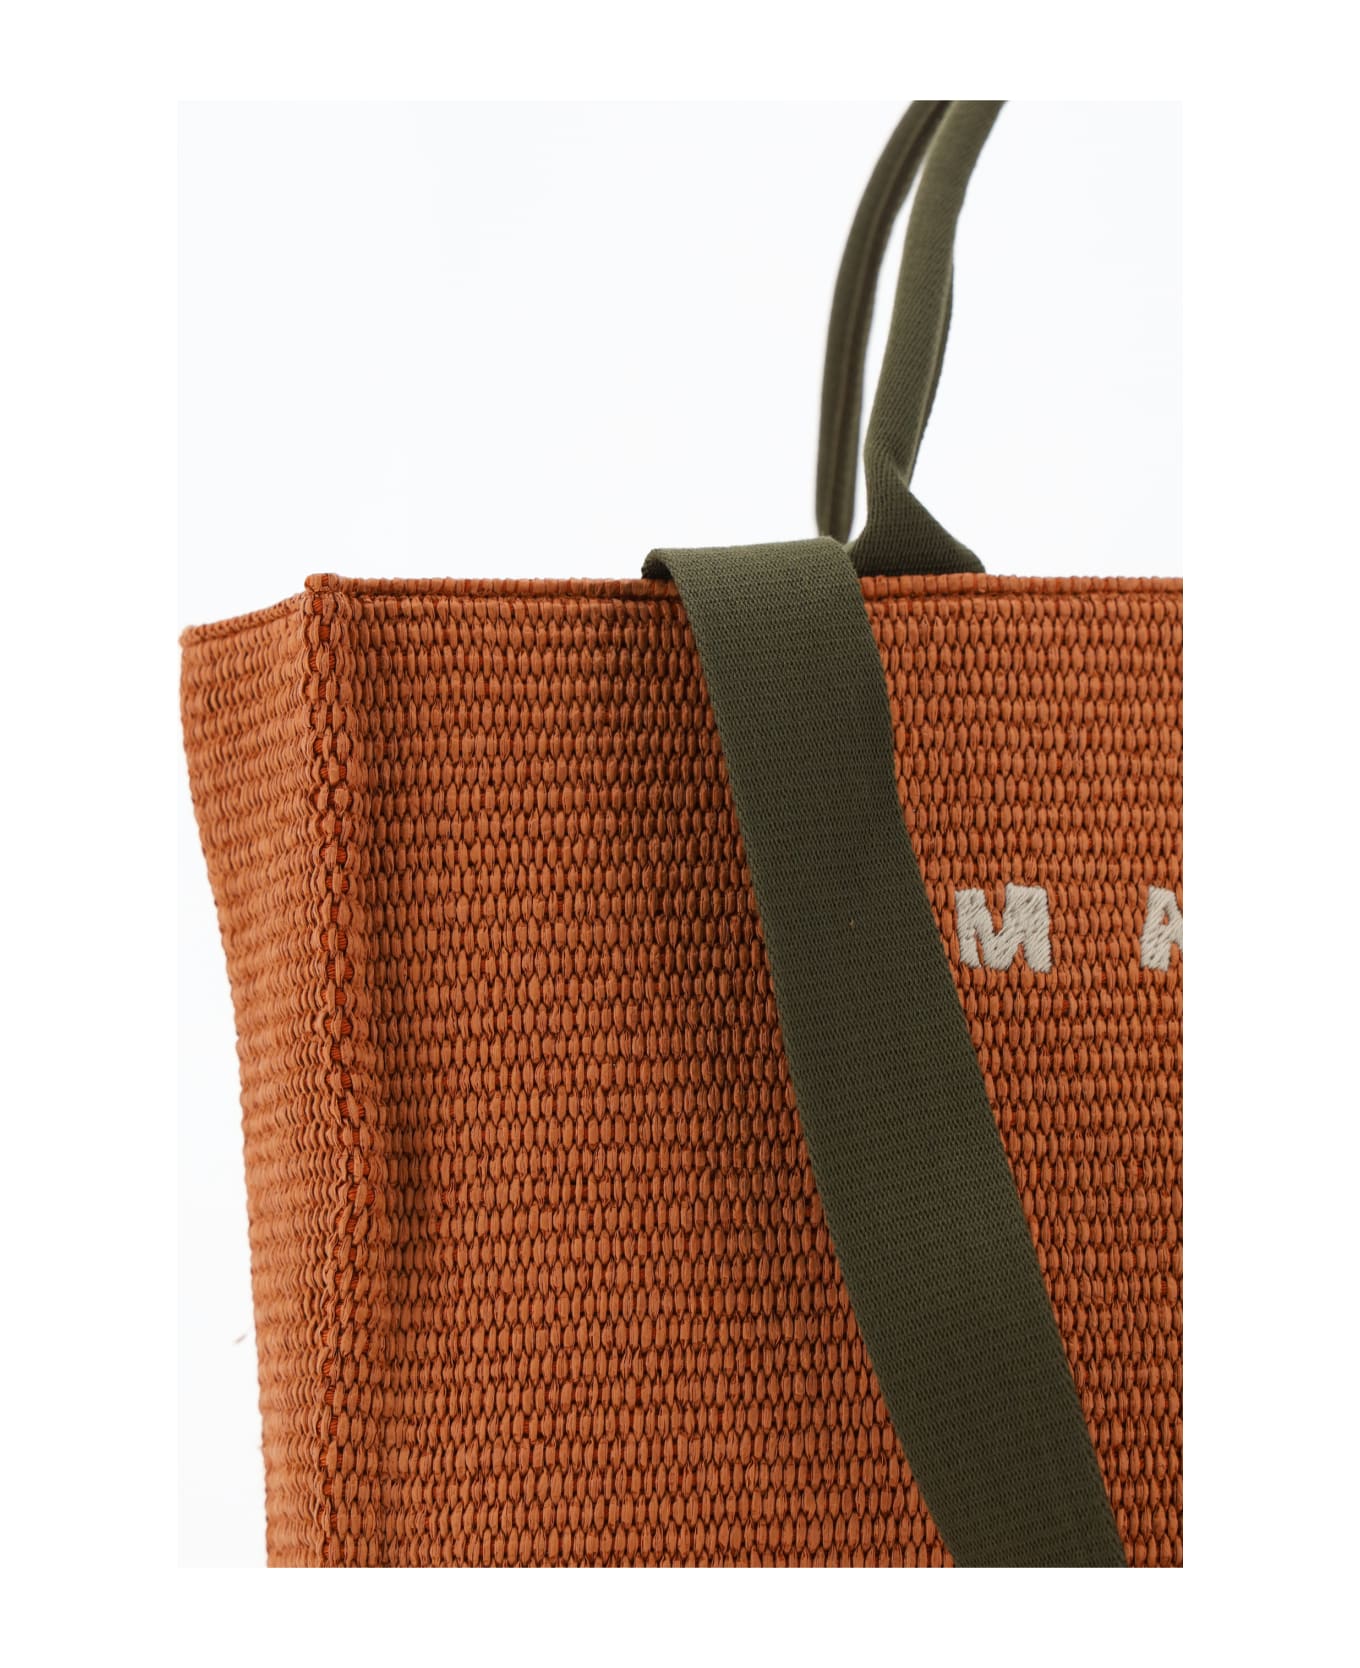 Marni Handbag - Brick/olive